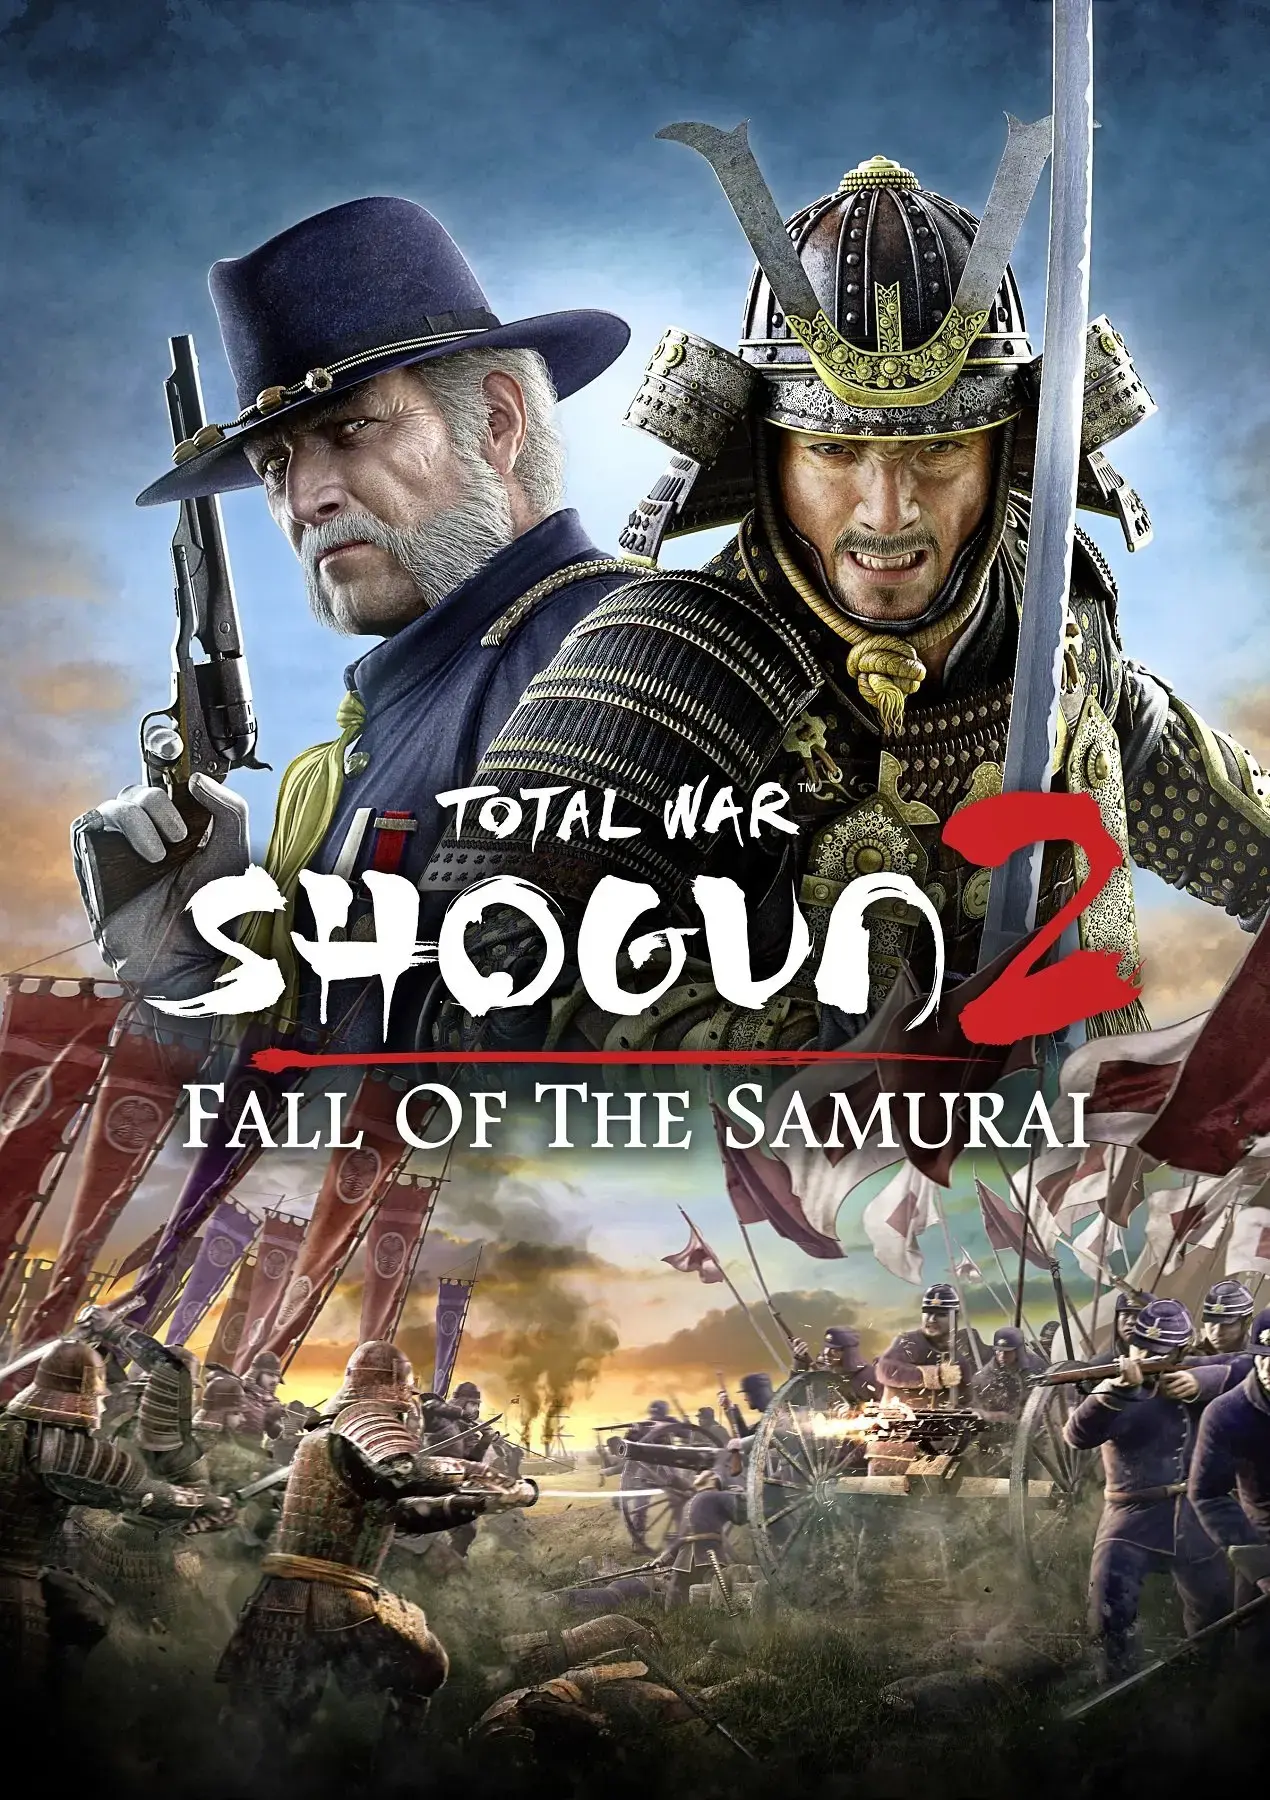 Total War Shogun 2: Fall of the Samurai (EU) (PC / Mac / Linux) - Steam - Digital Code